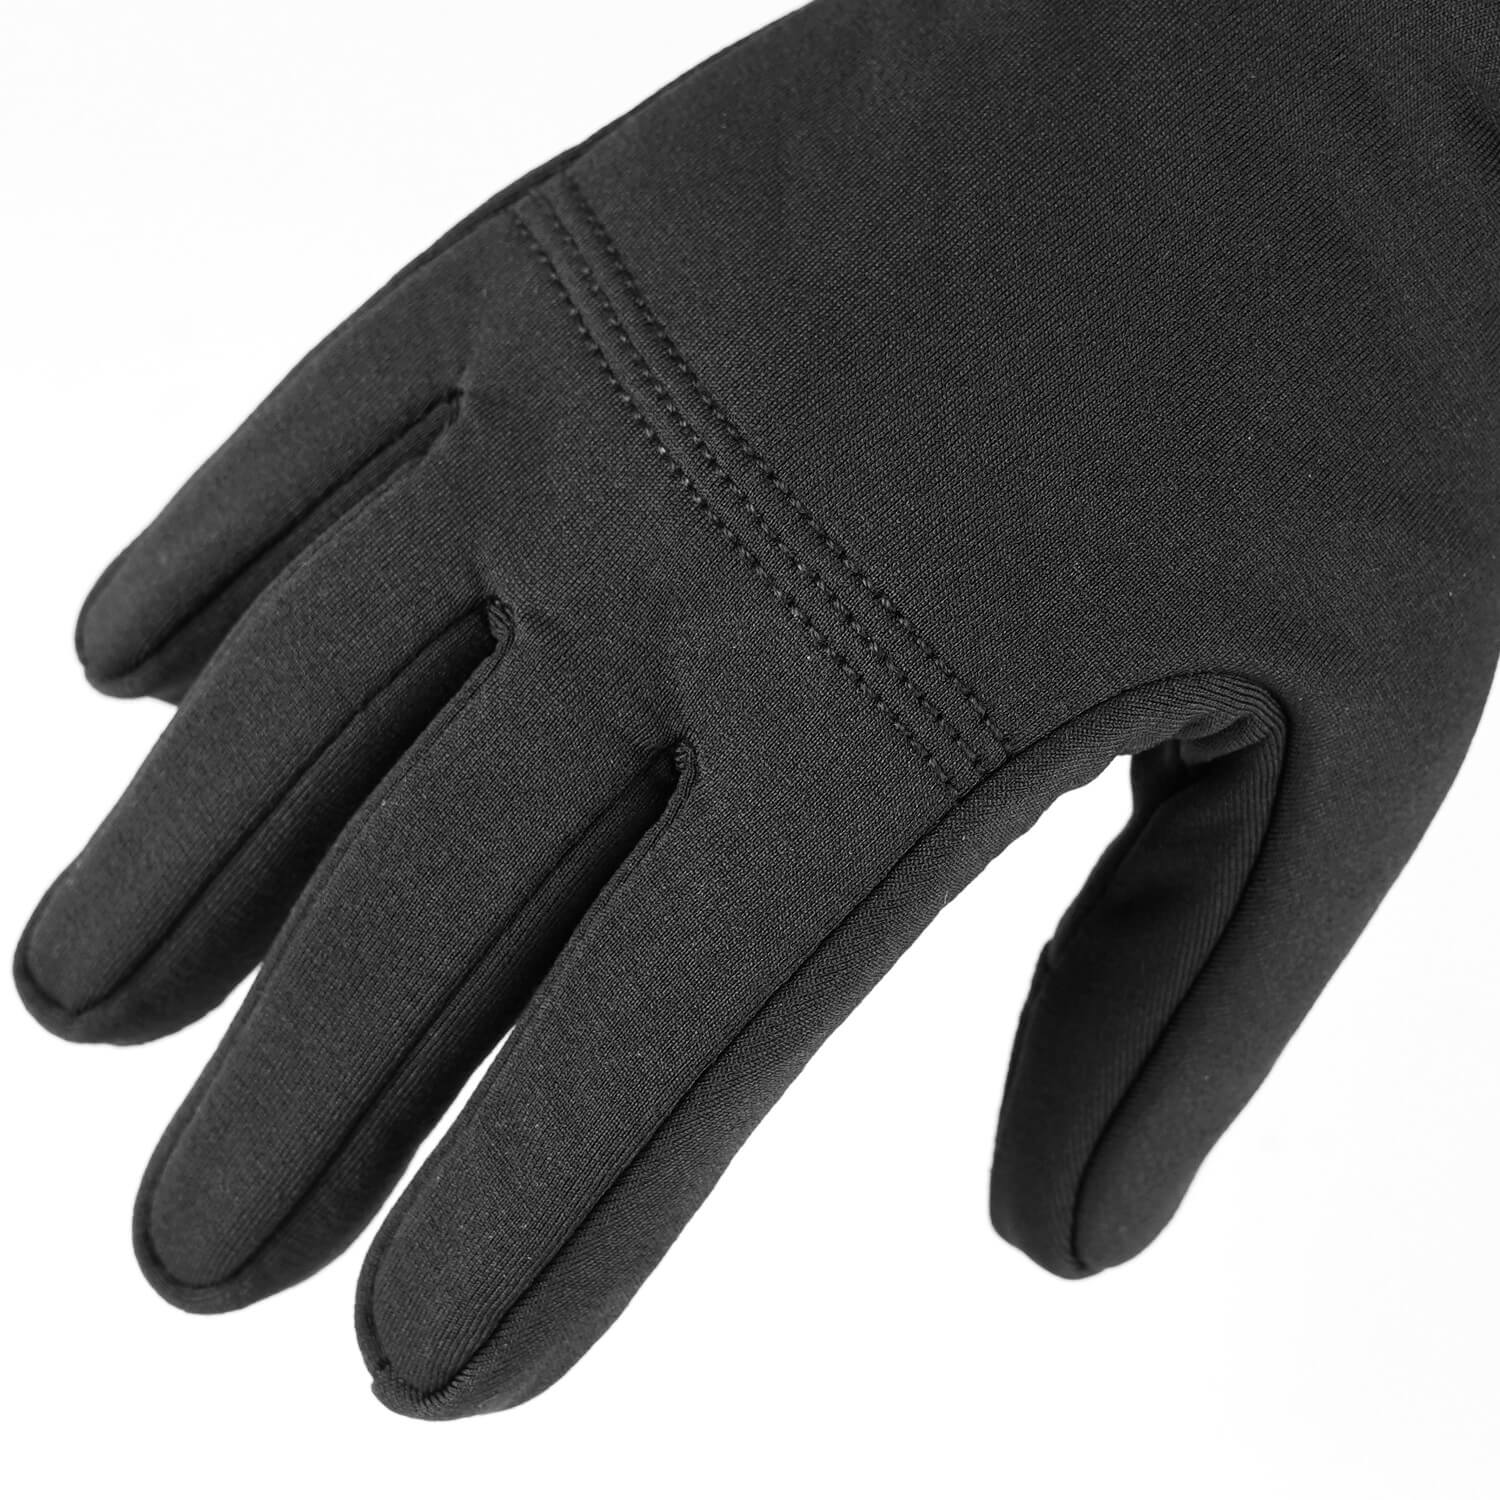 S13 heated gloves